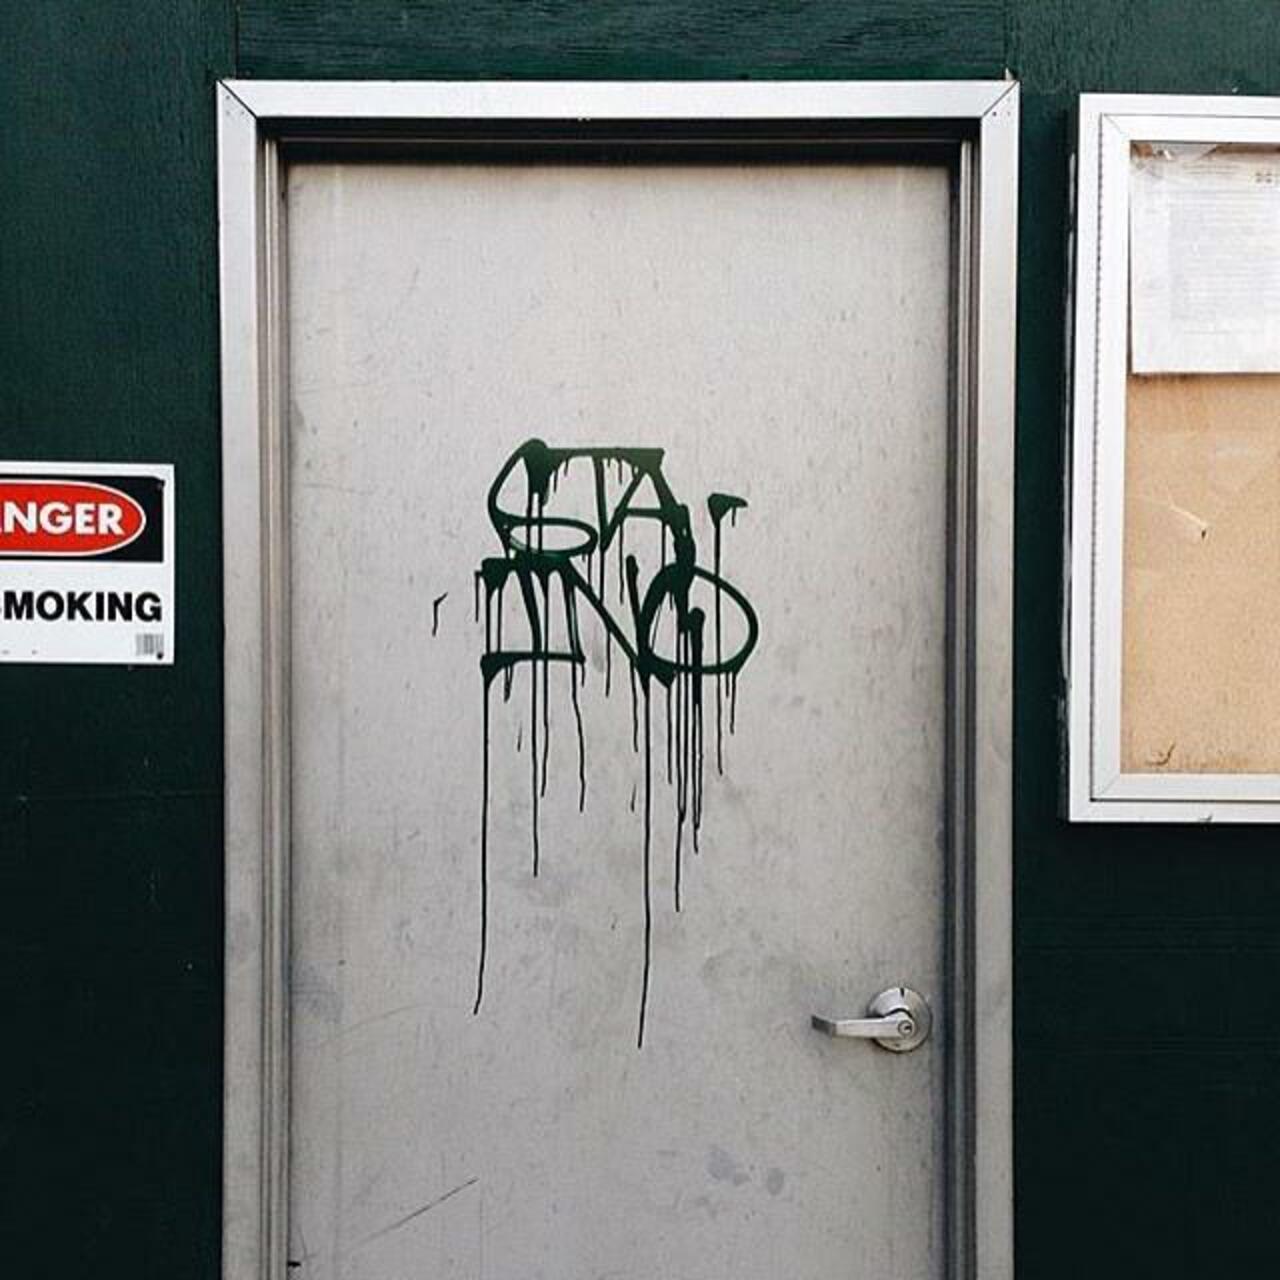 RT @artpushr: via #stainonyc "http://ift.tt/1QK4vqT" #graffiti #streetart http://t.co/tfHY8aBPHa